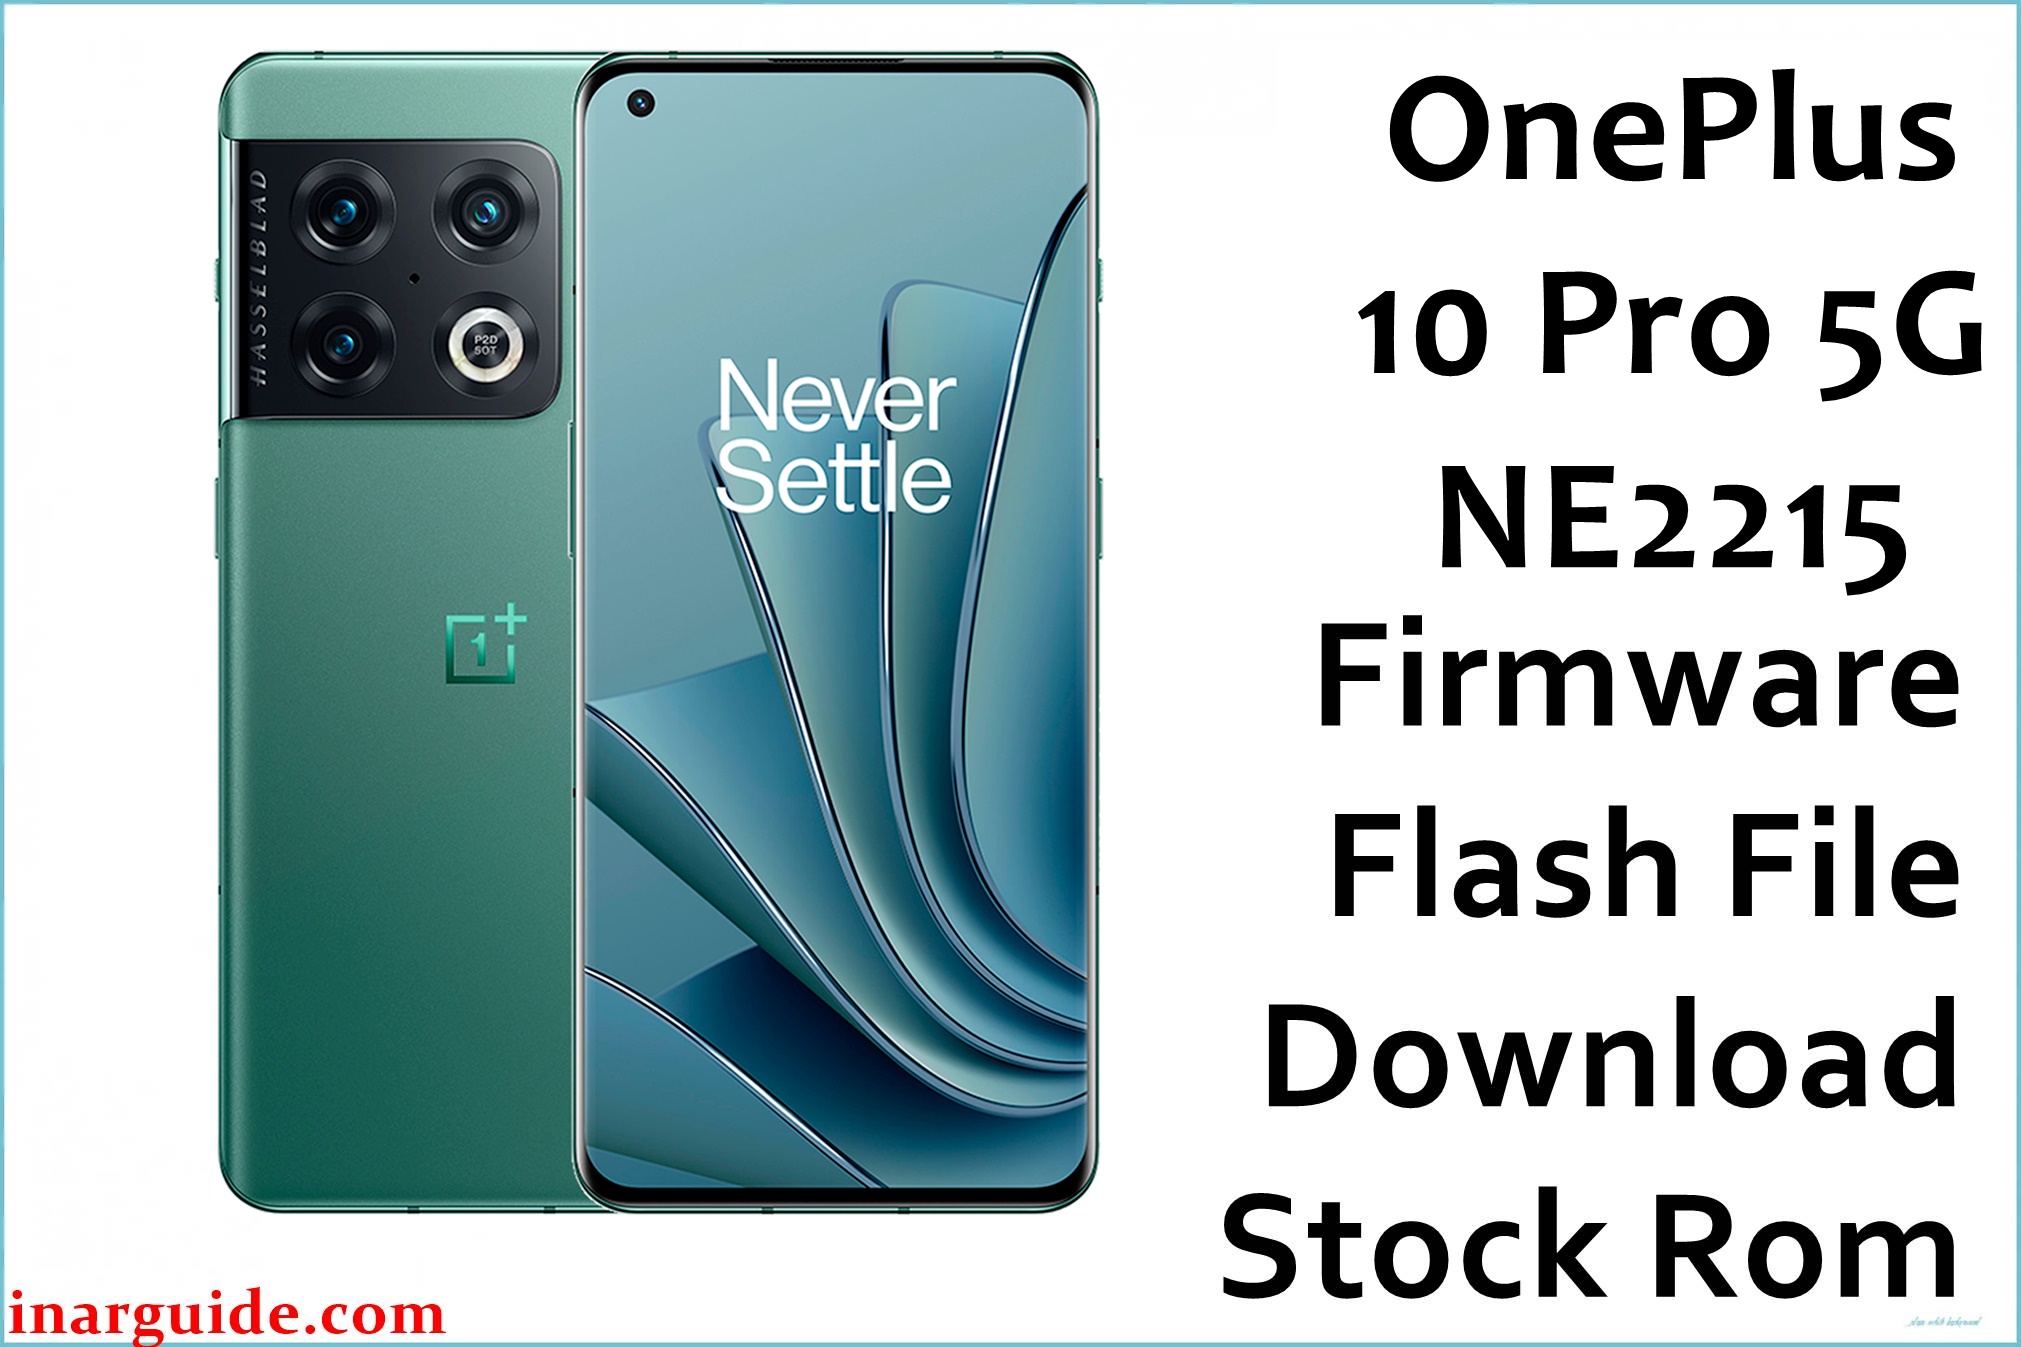 OnePlus 10 Pro 5G NE2215